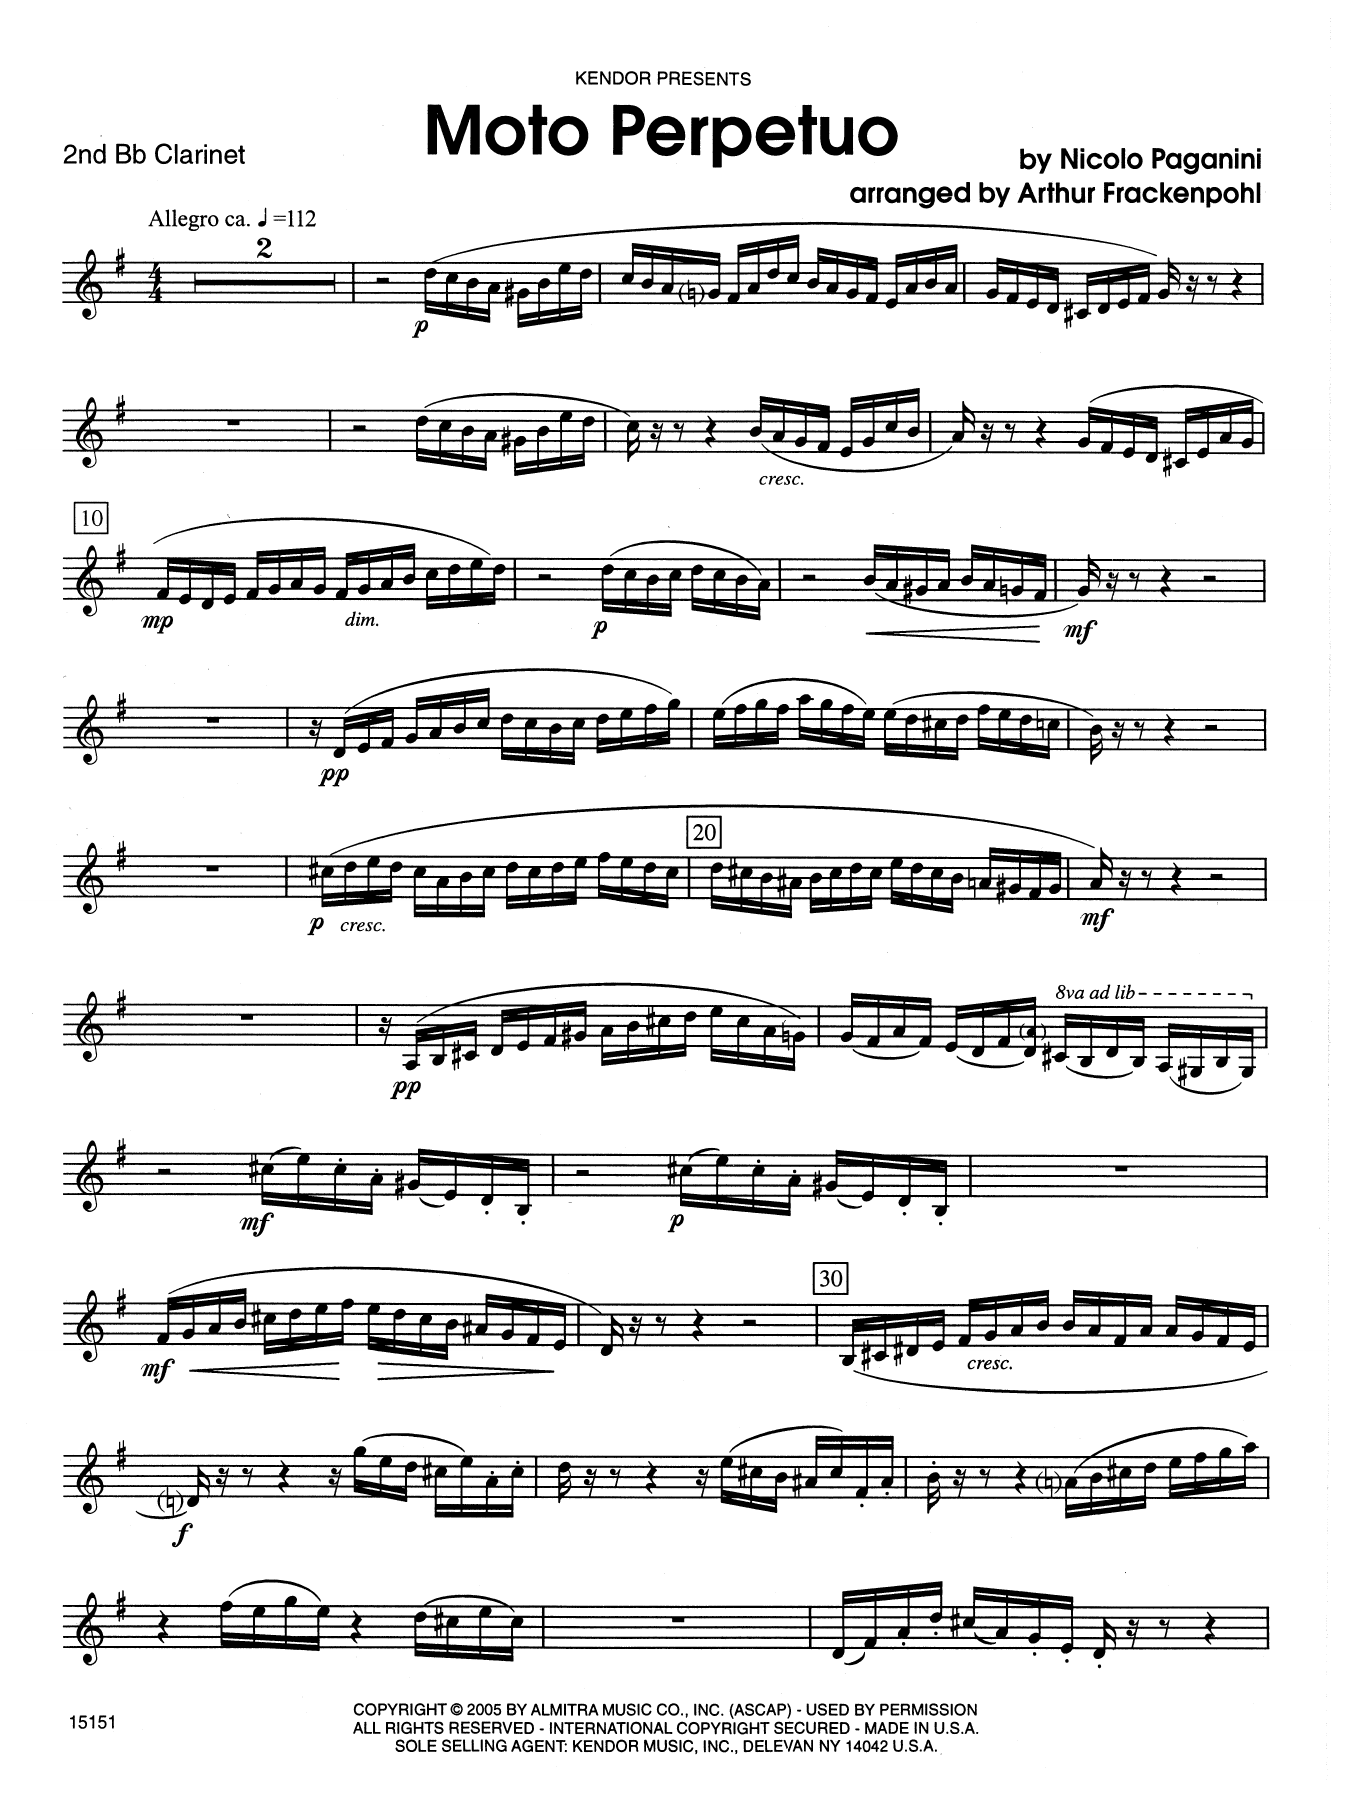 Download Arthur Frackenpohl Moto Perpetuo - 2nd Bb Clarinet Sheet Music